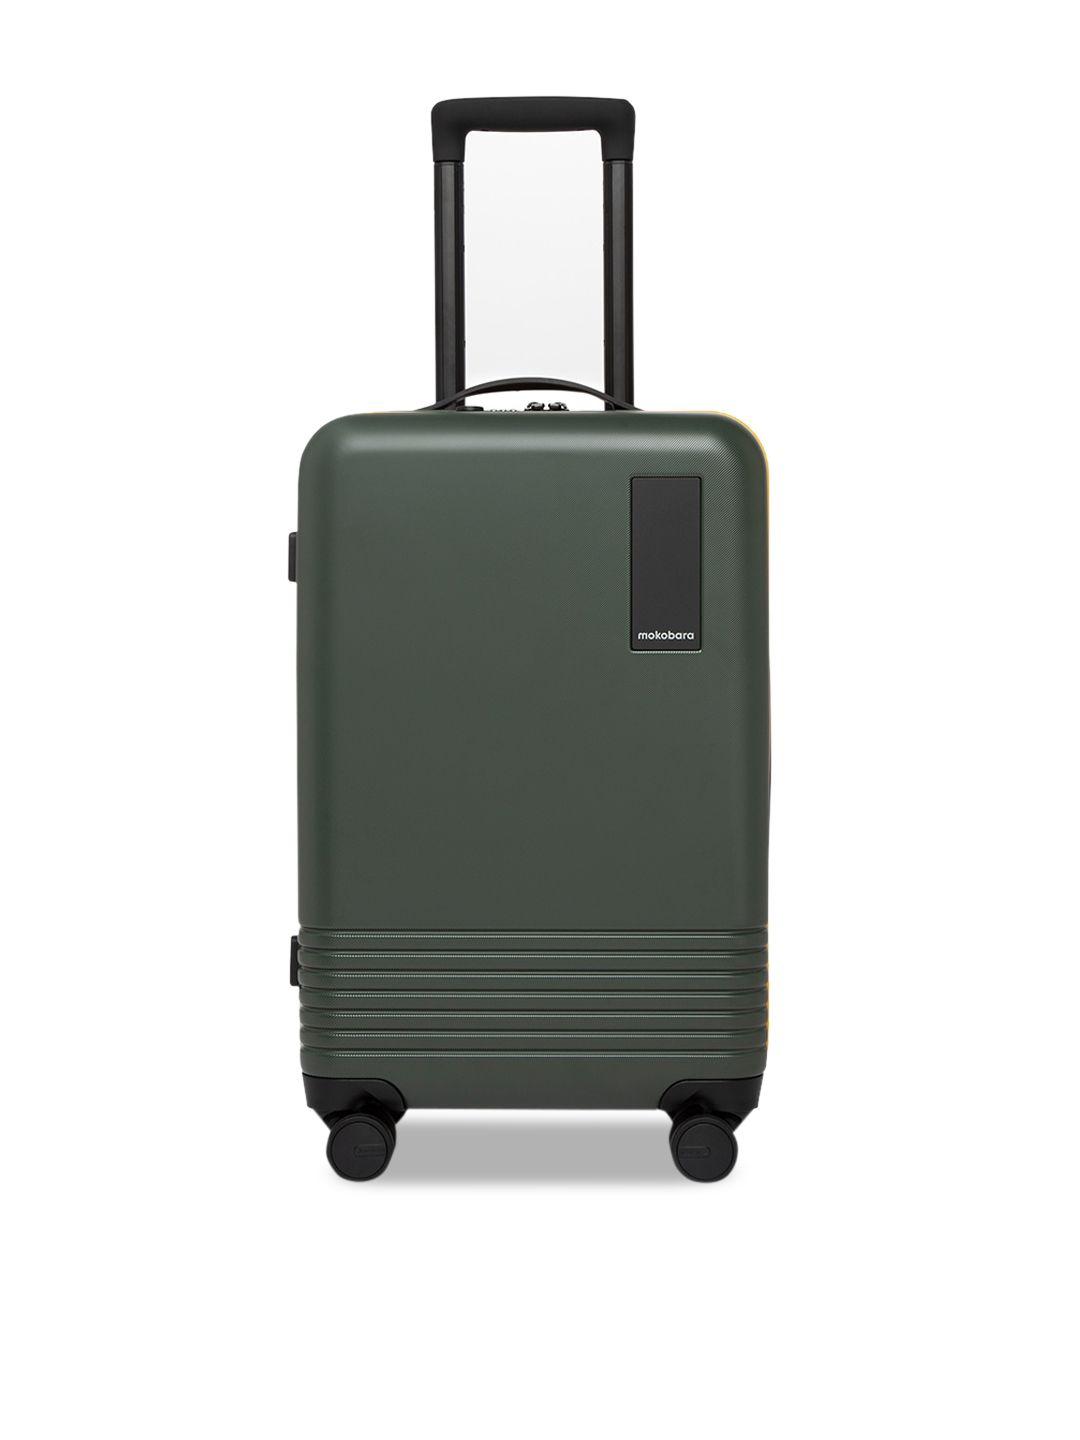 mokobara olive green textured cabin trolley suitcase